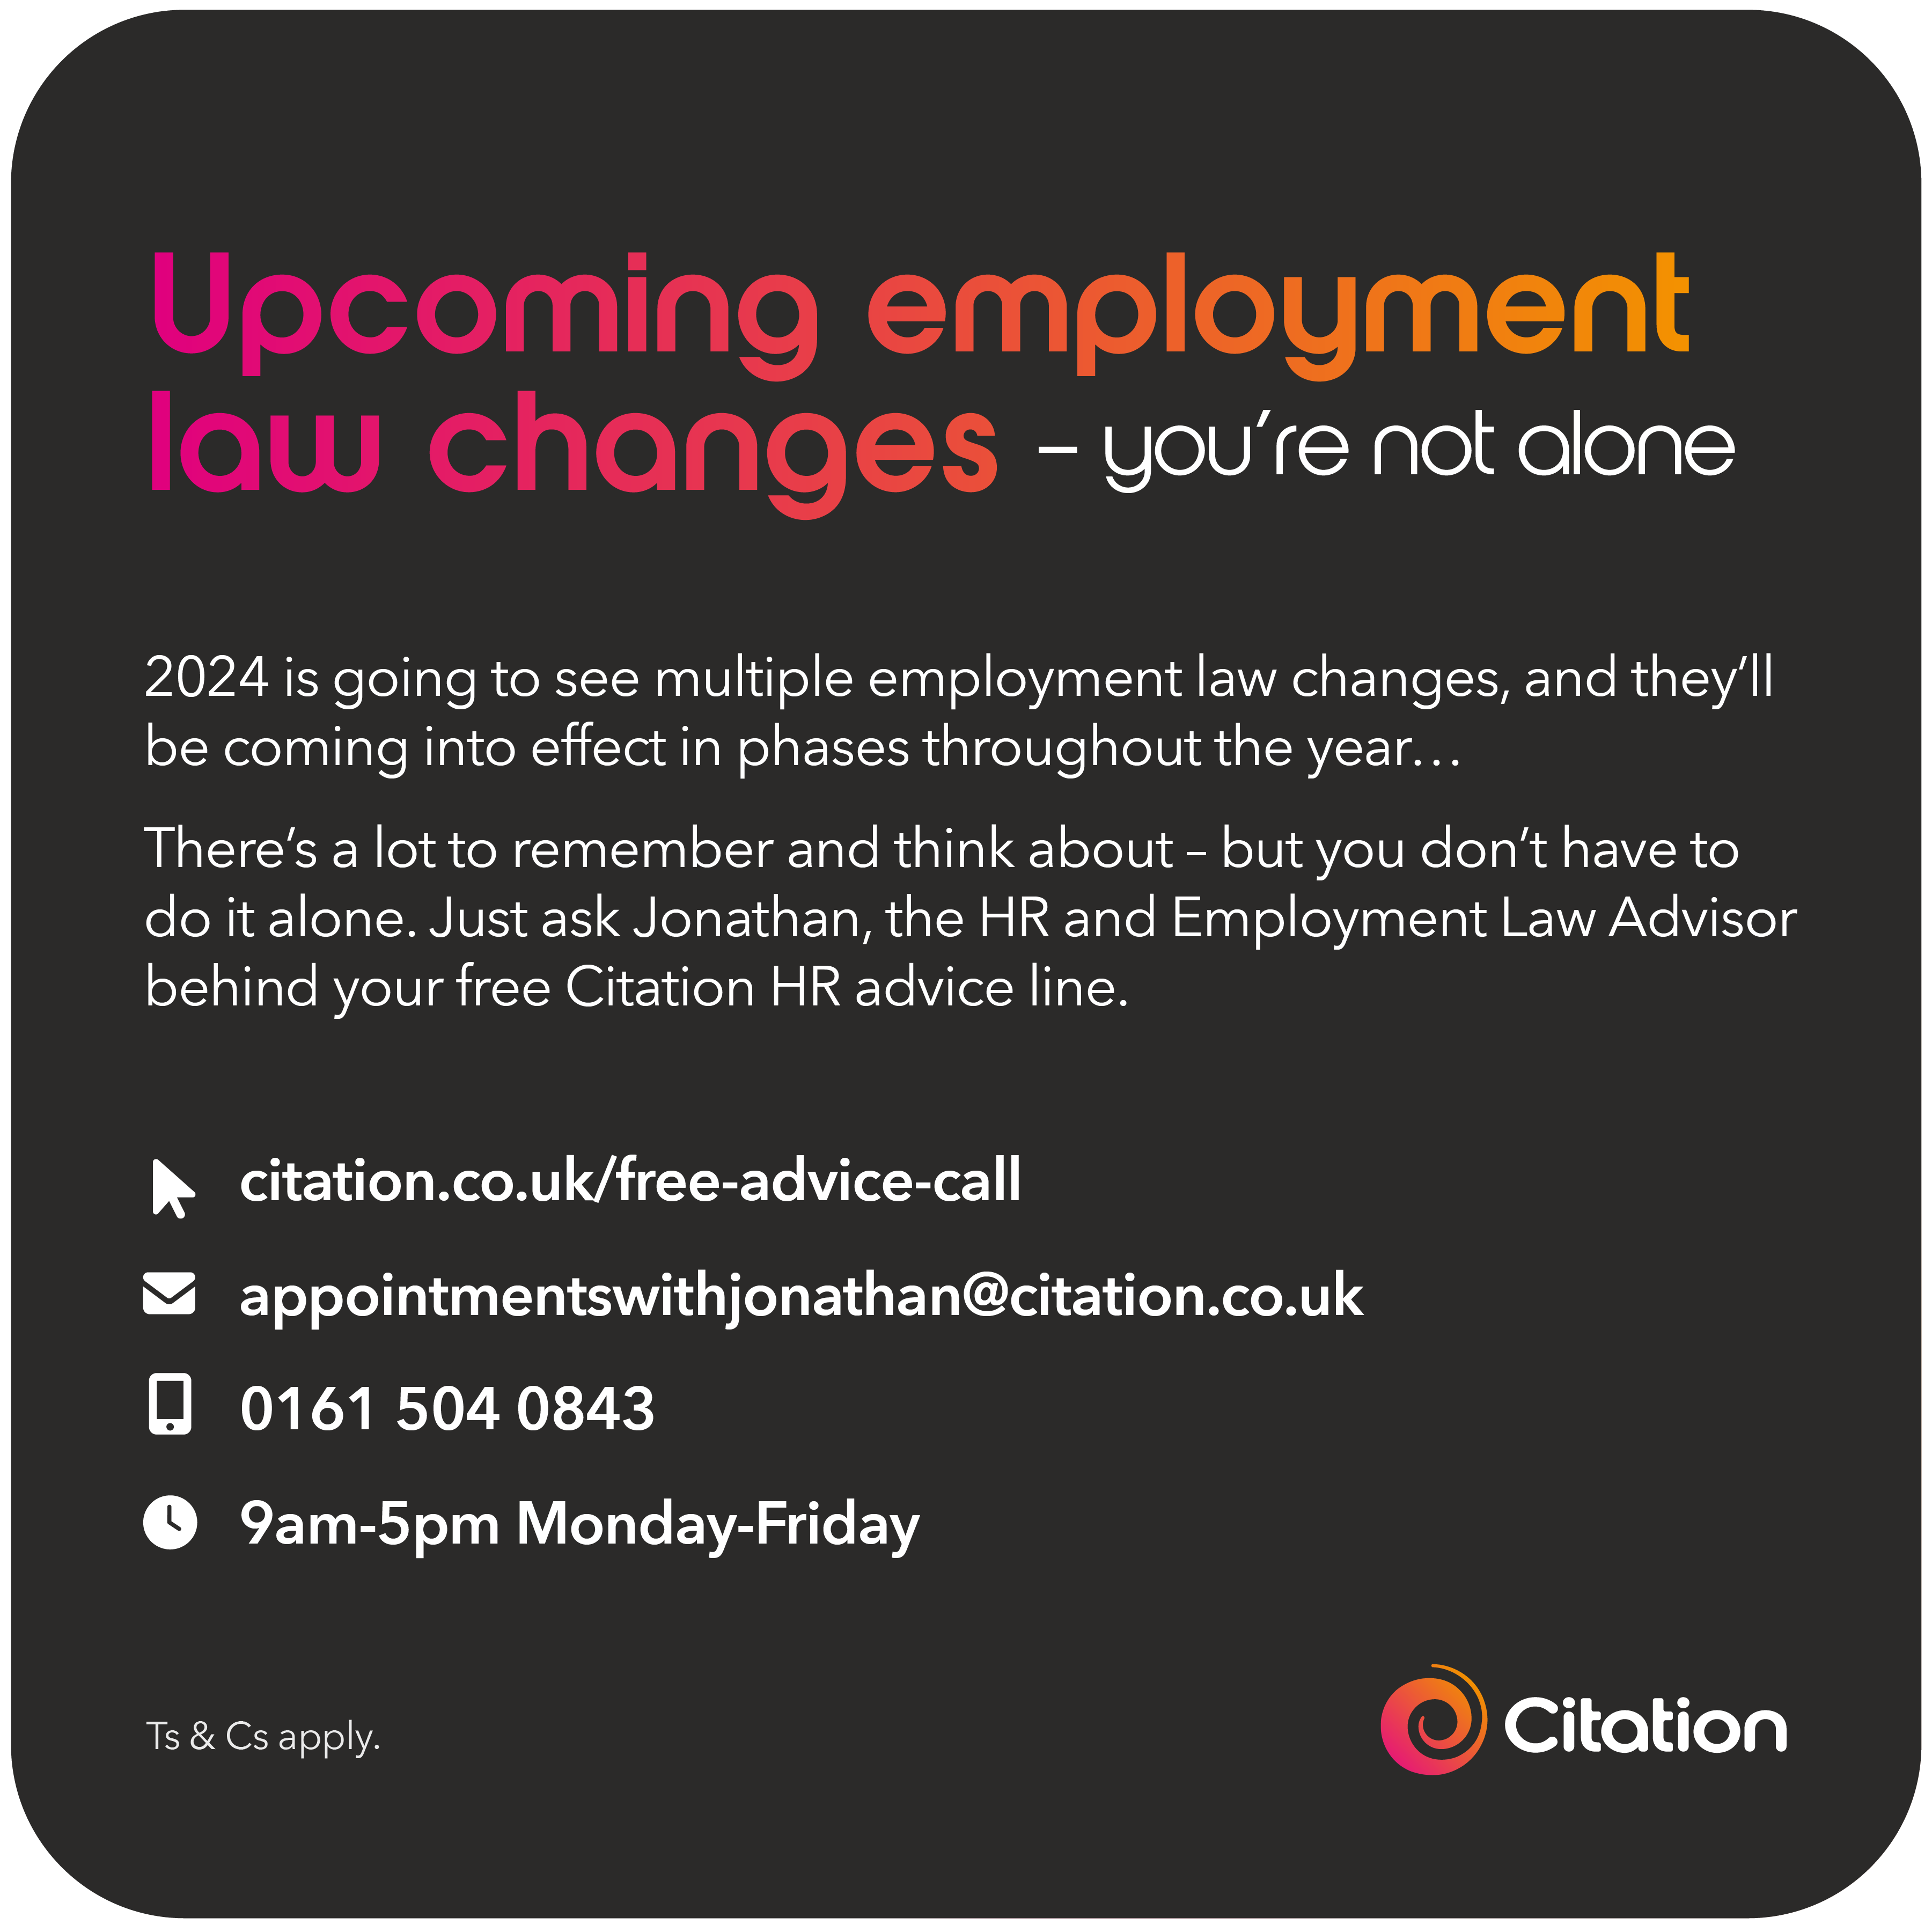 https://stratus.campaign-image.eu/images/32883000015039016_zc_v1_1708609719363_citation___upcoming_employment_law_changes___feb_2024.png